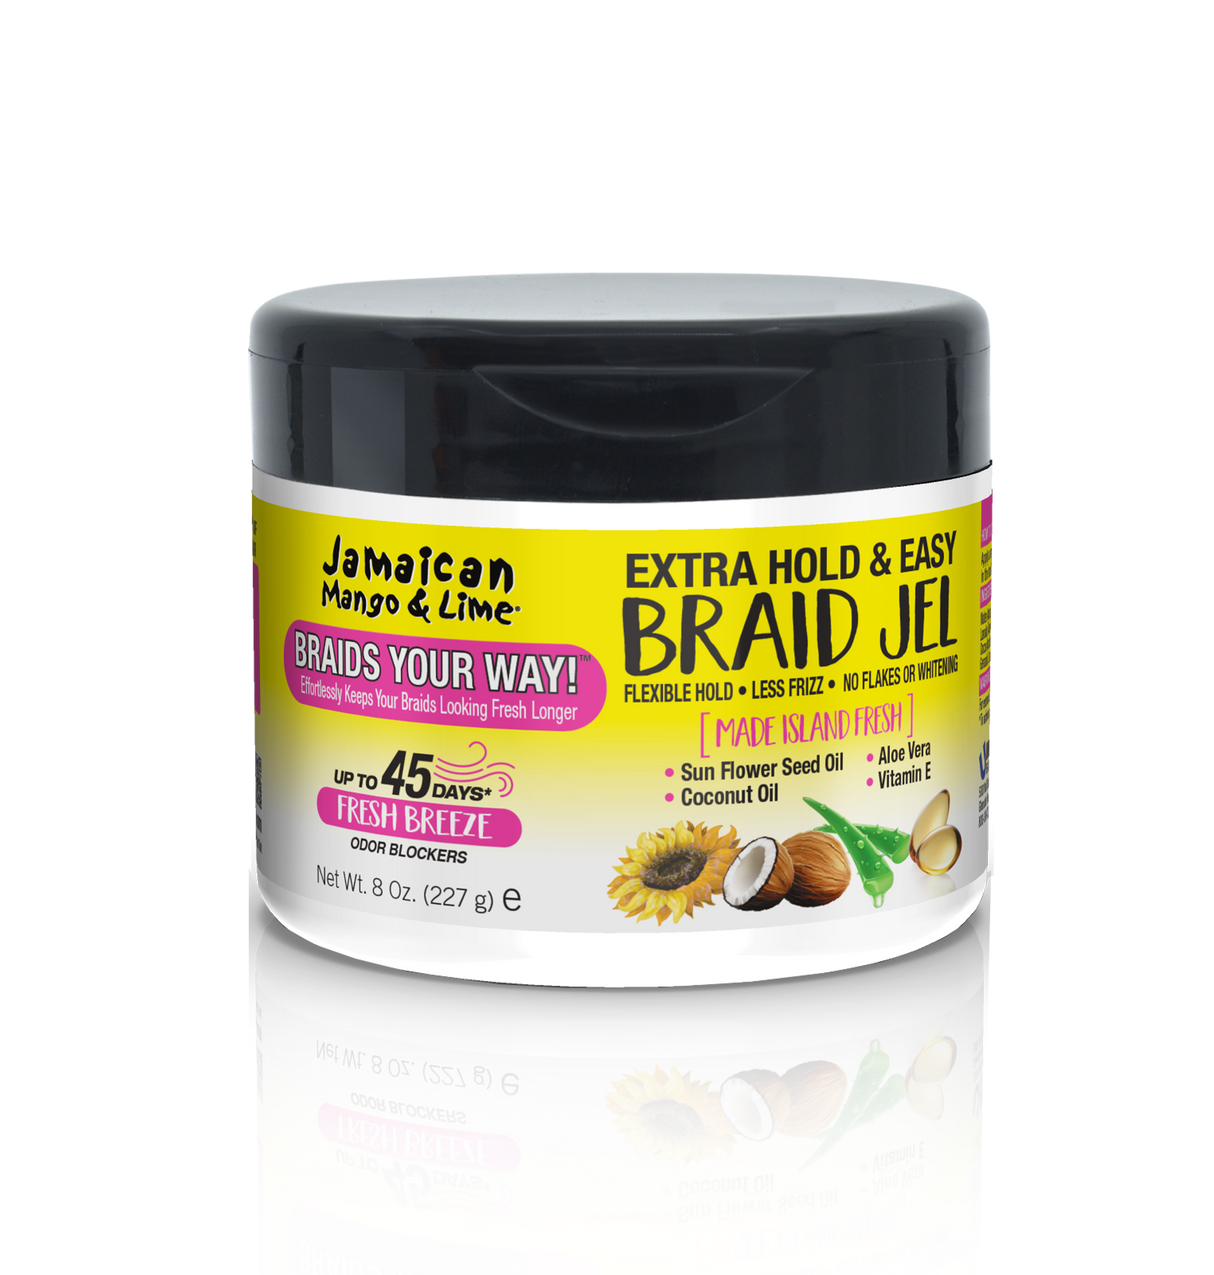 Jamaican Mango & Lime® Extra Hold & Easy Braid Jel